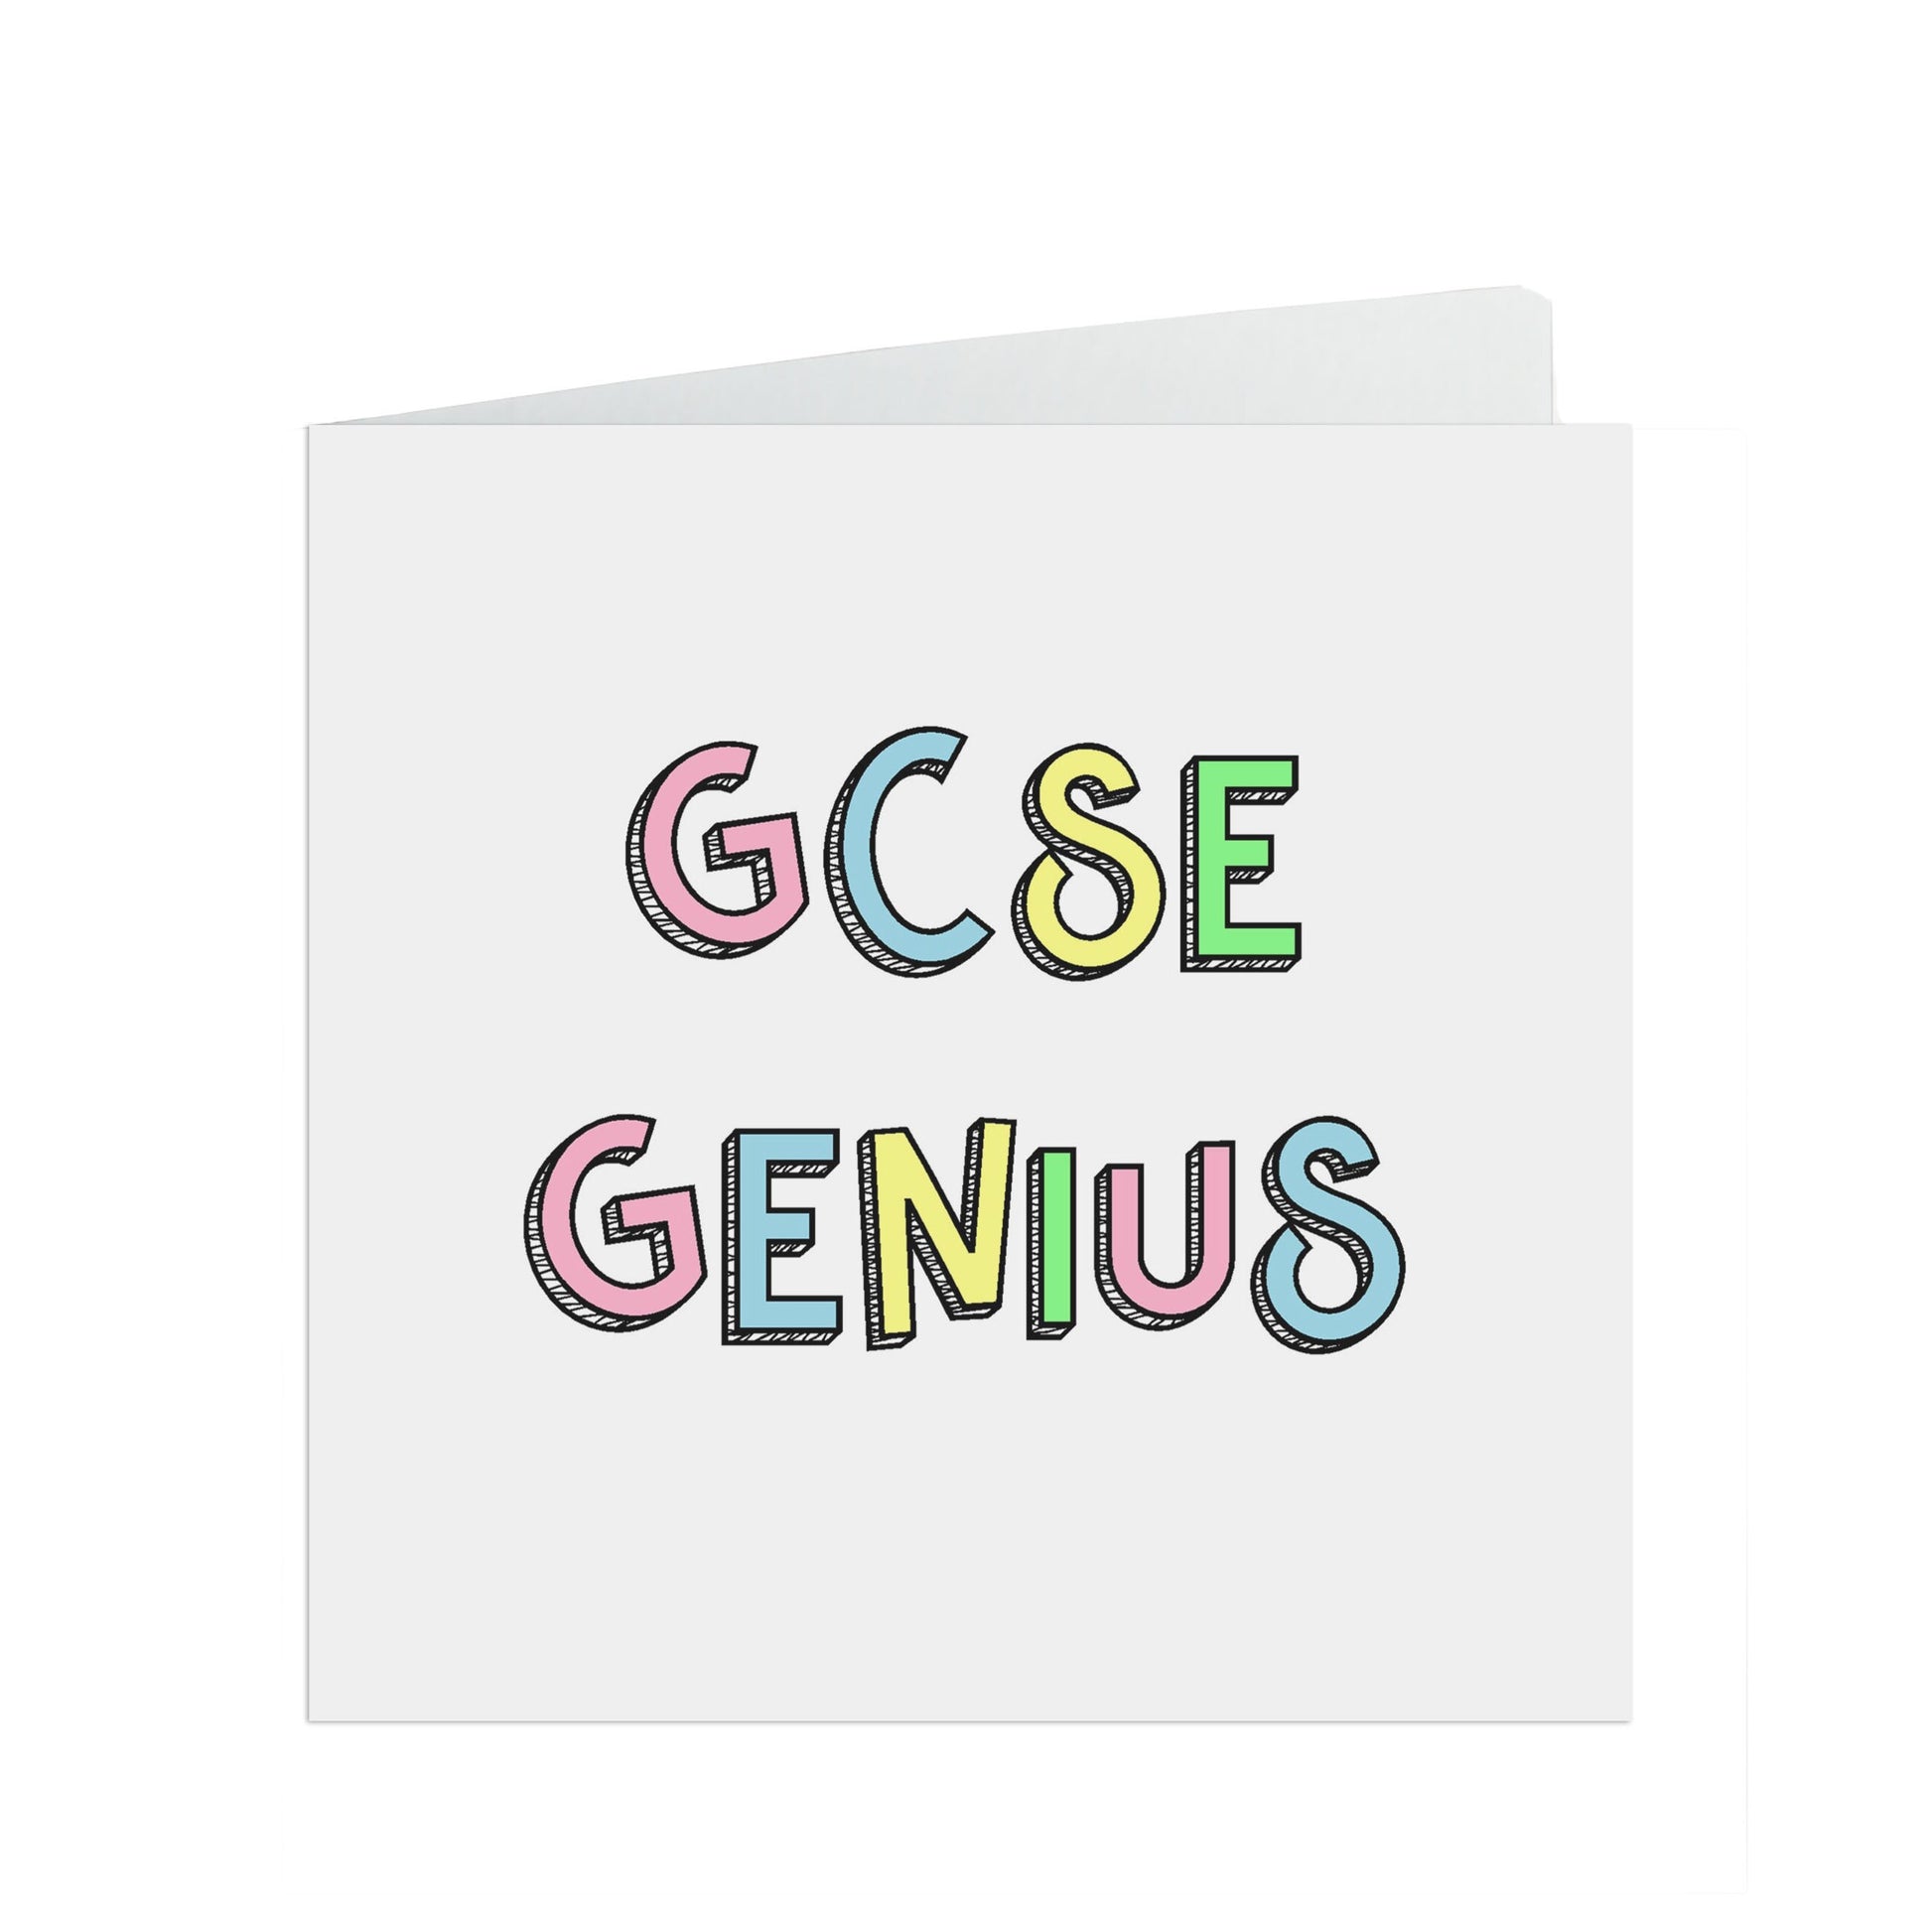 GCSE Genius! Congratulations passed exams or graduated funny card